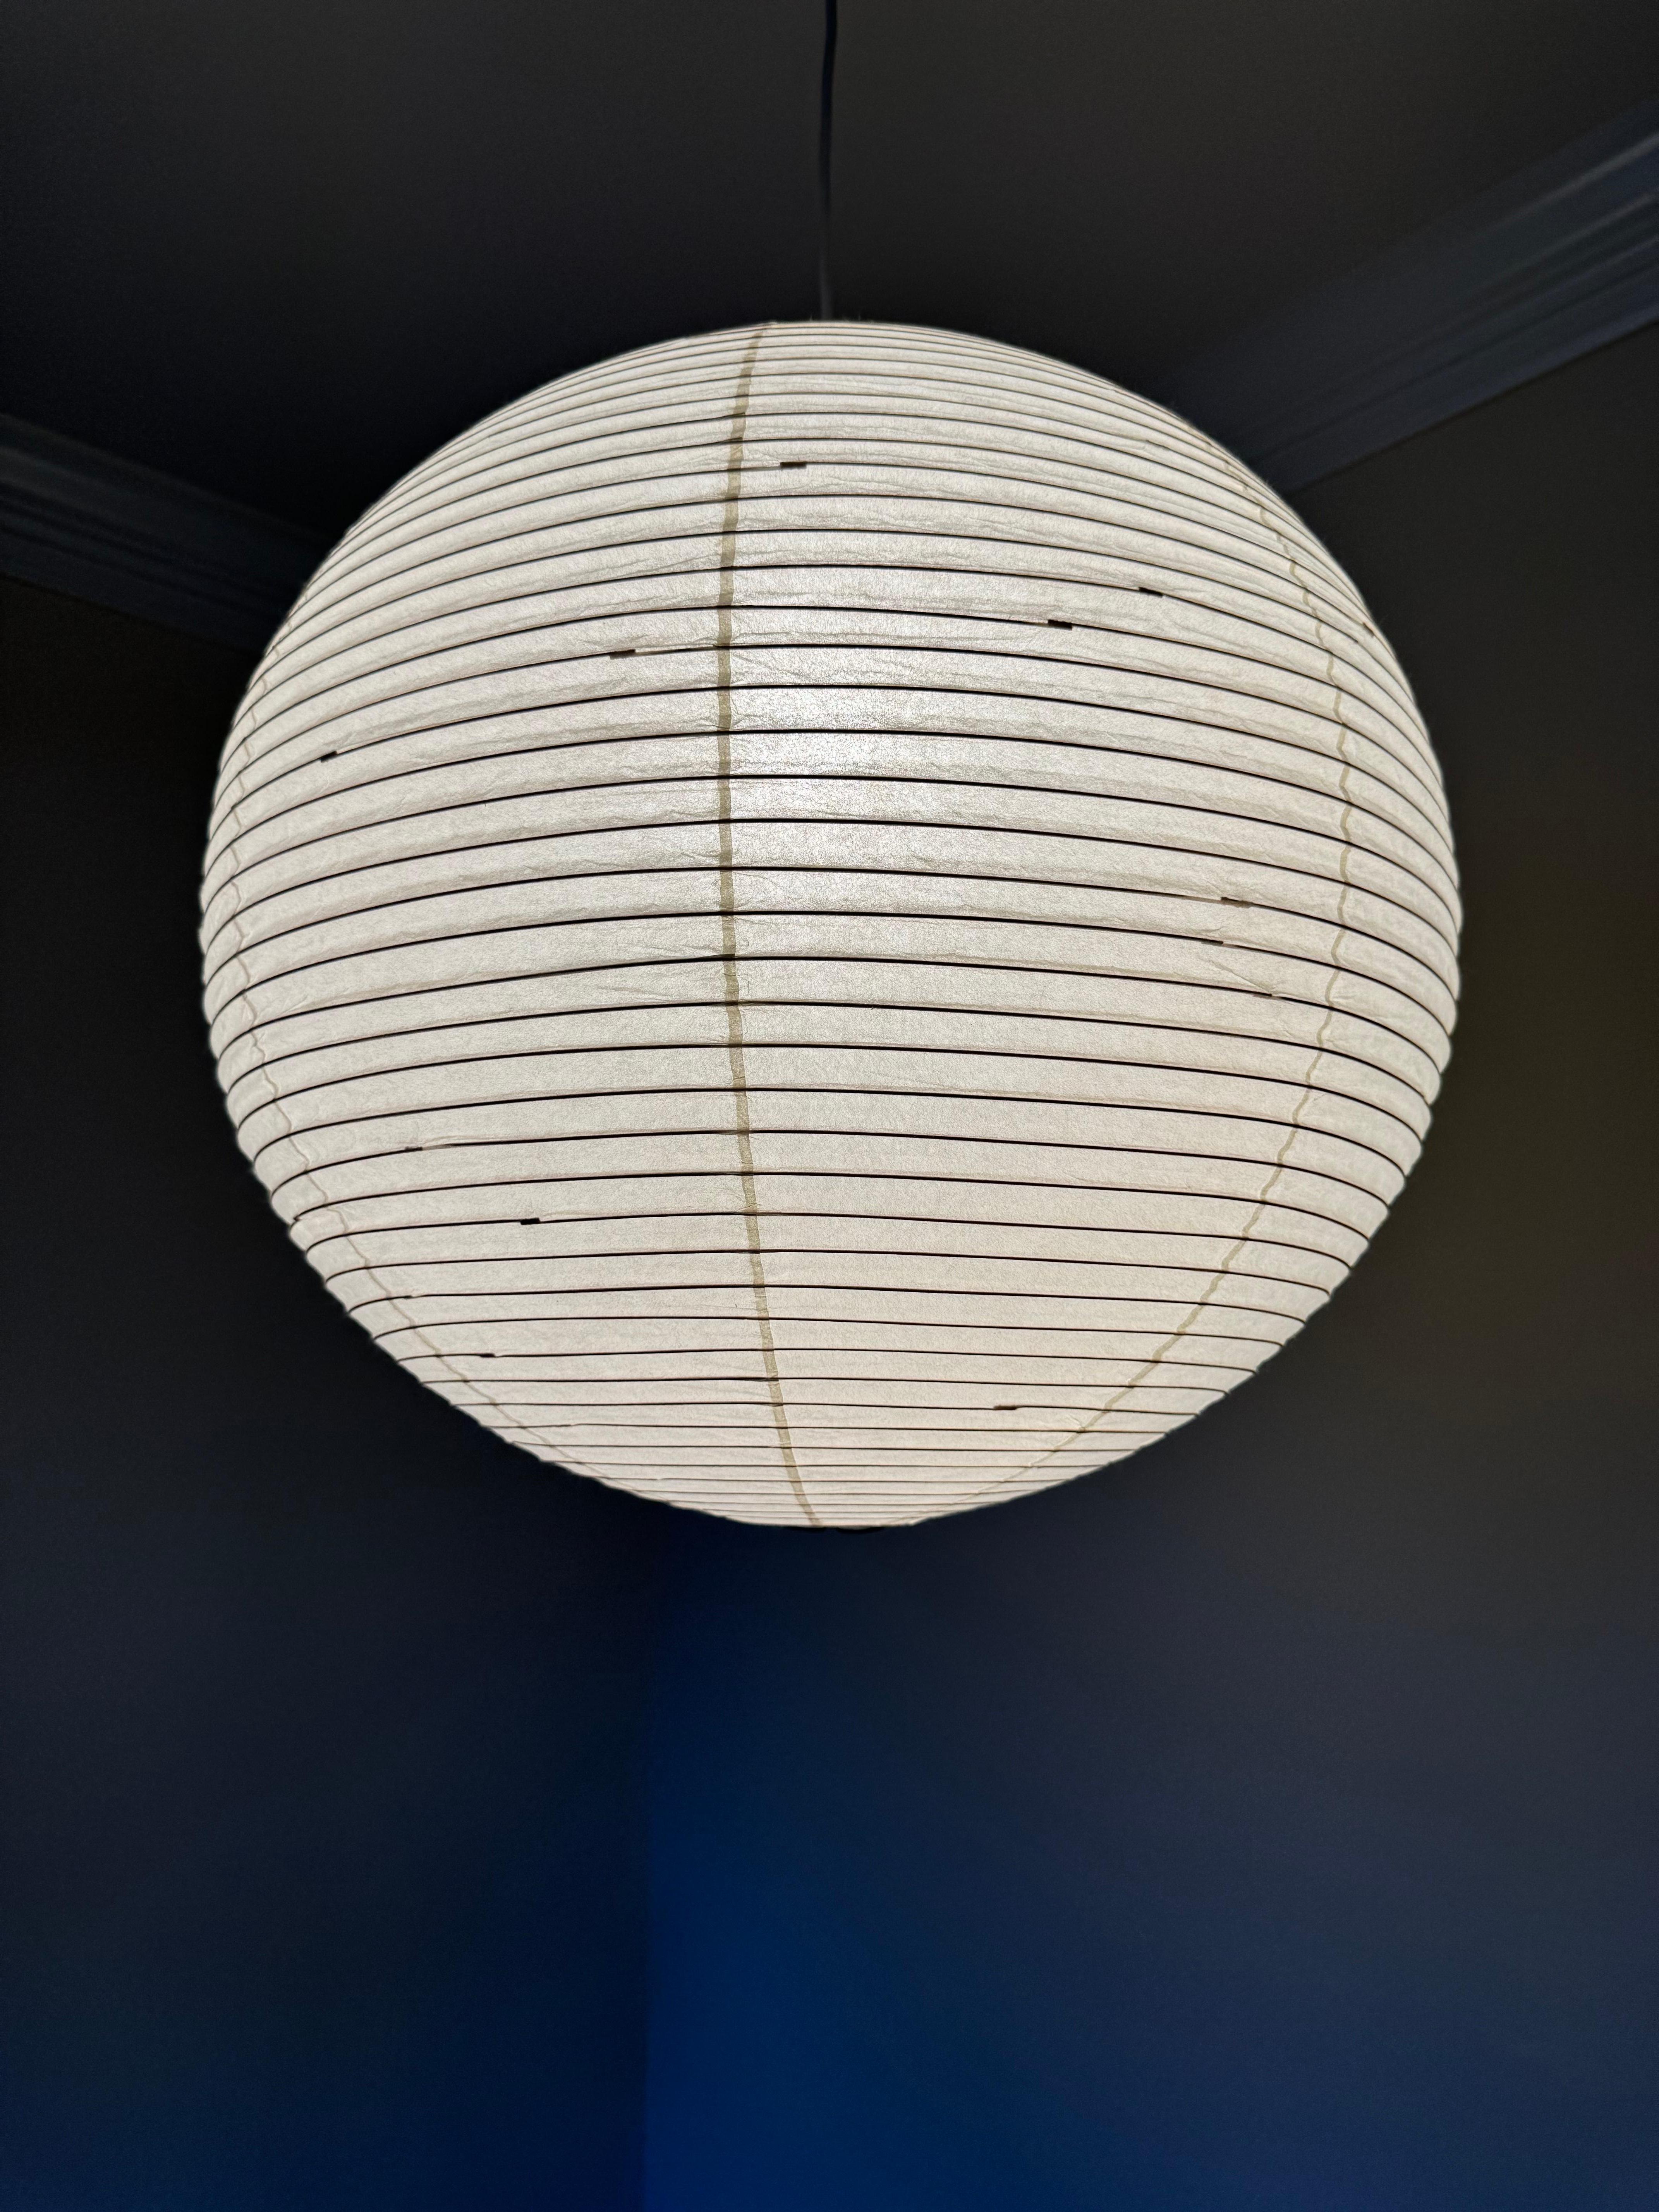 Bamboo Isamu Noguchi Akari Light Sculpture, Model 55A Ceiling Lamp